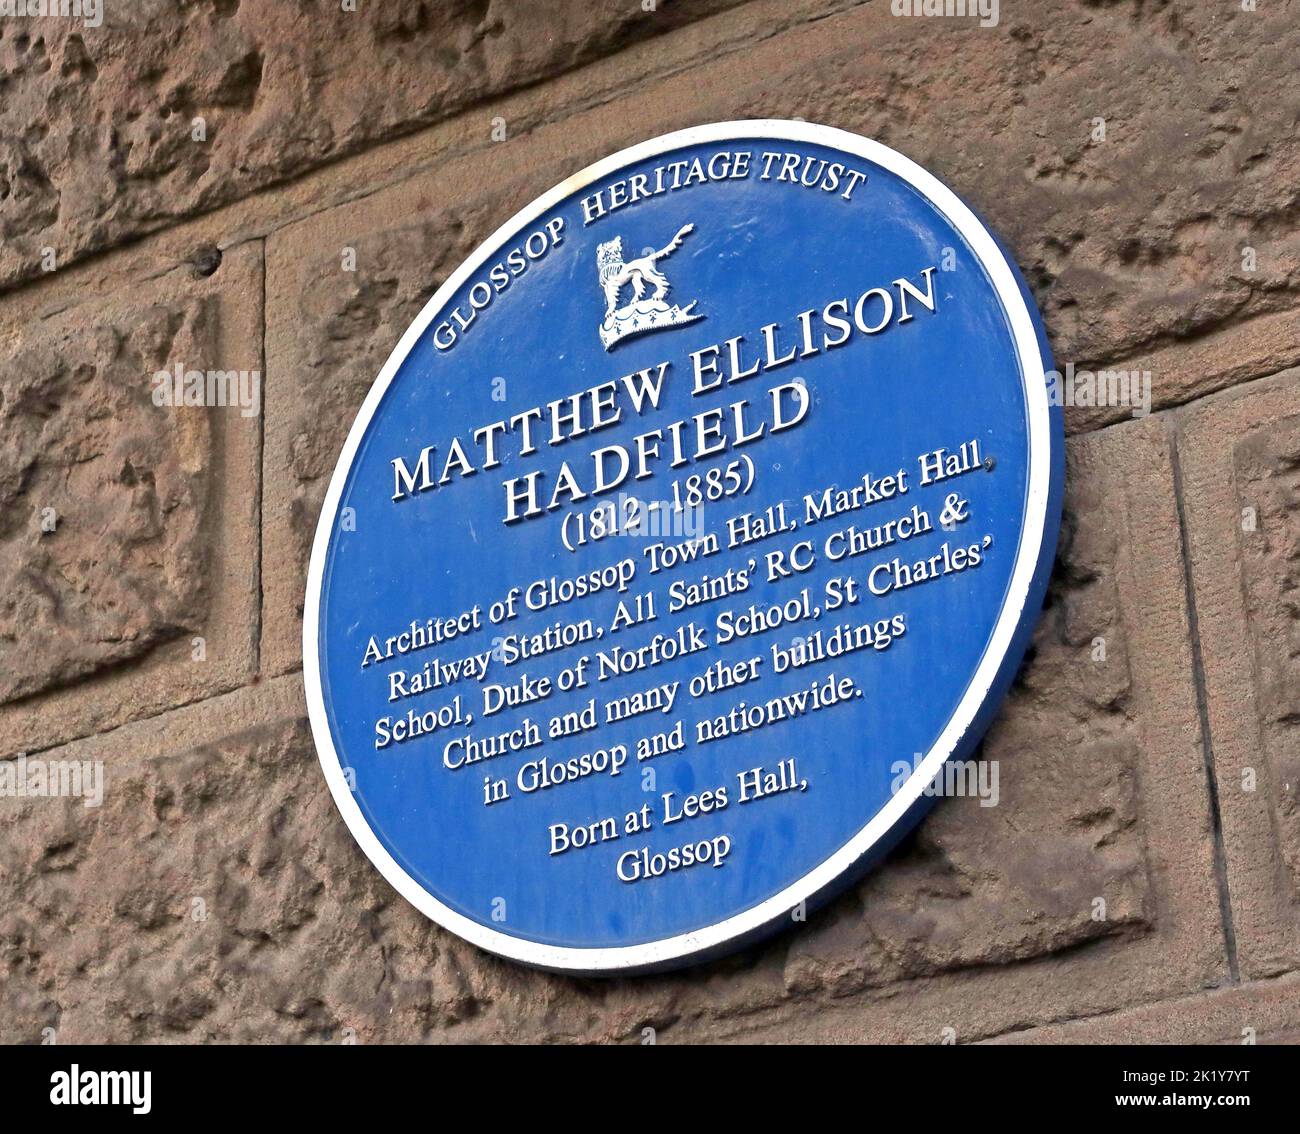 Blue Plaque, Glossop Heritage Trust, Matthew Ellison Hadfield, on Glossop town hall, High Peak, Derbys, England, UK, SK13 Stock Photo